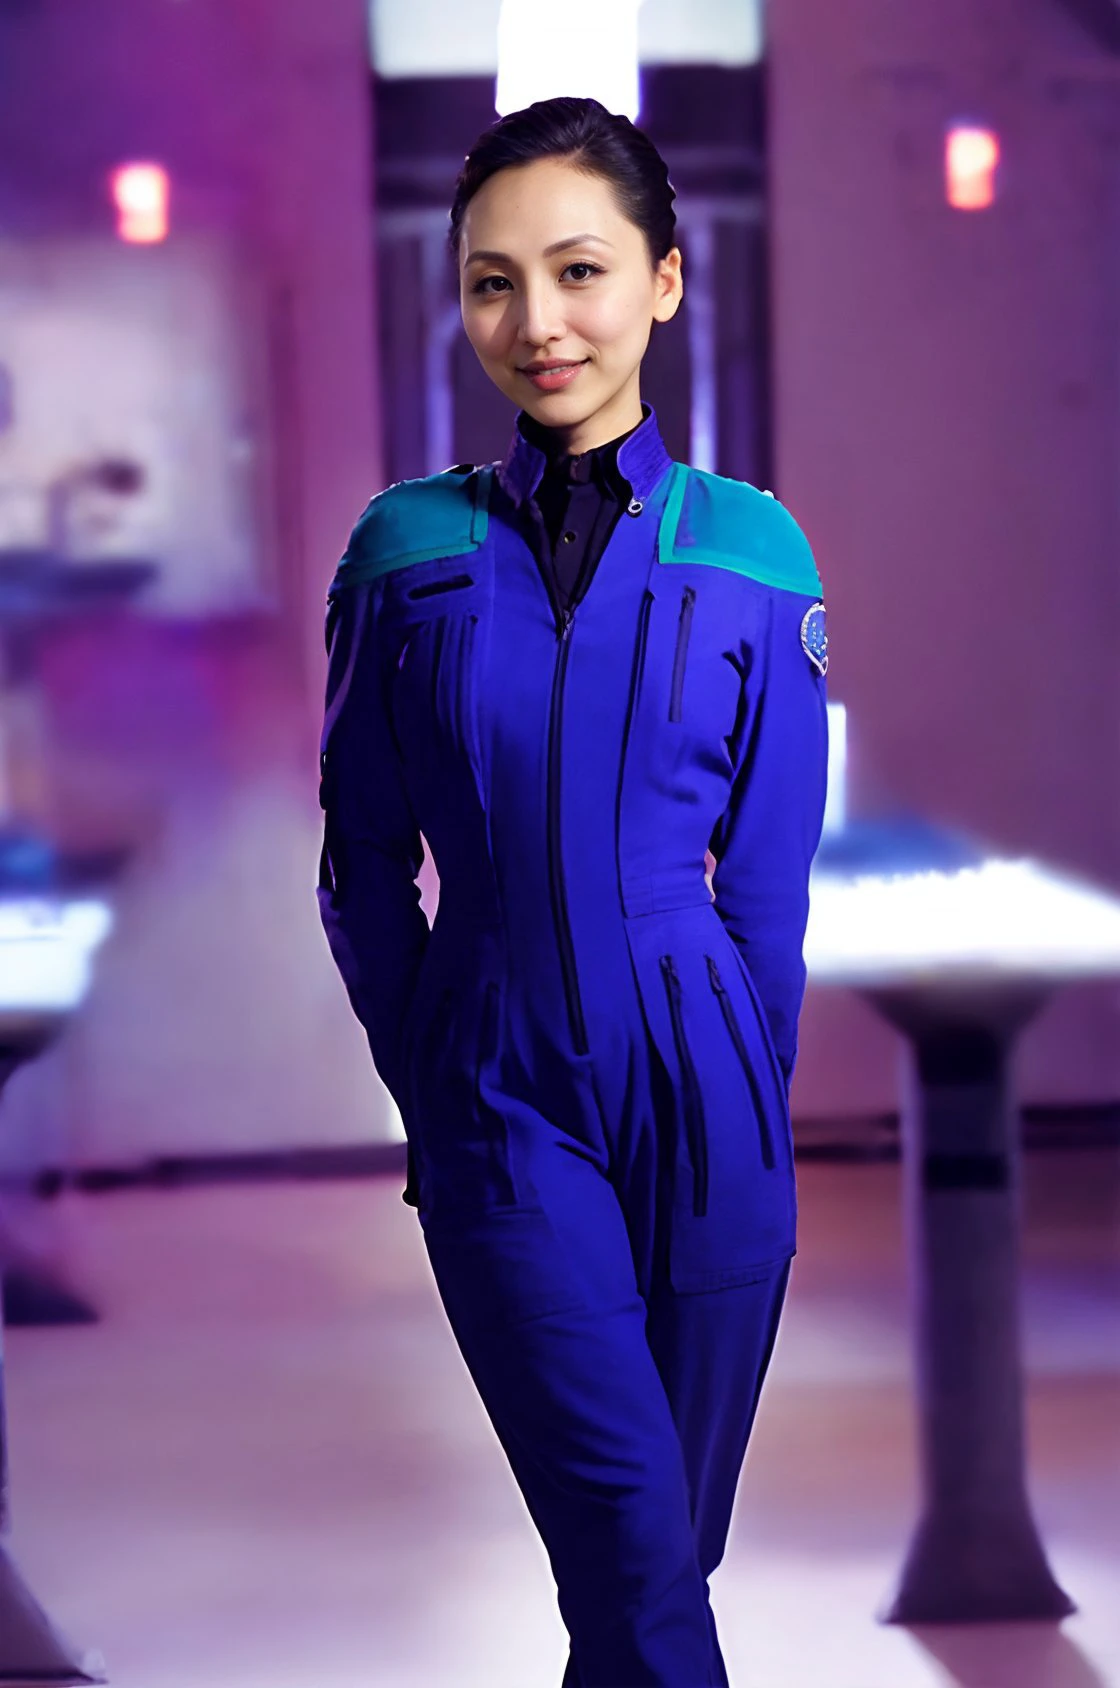 high quality photo of linda park  enterpriseuniform, blue jumpsuit, sciences division, teal piping on shoulders